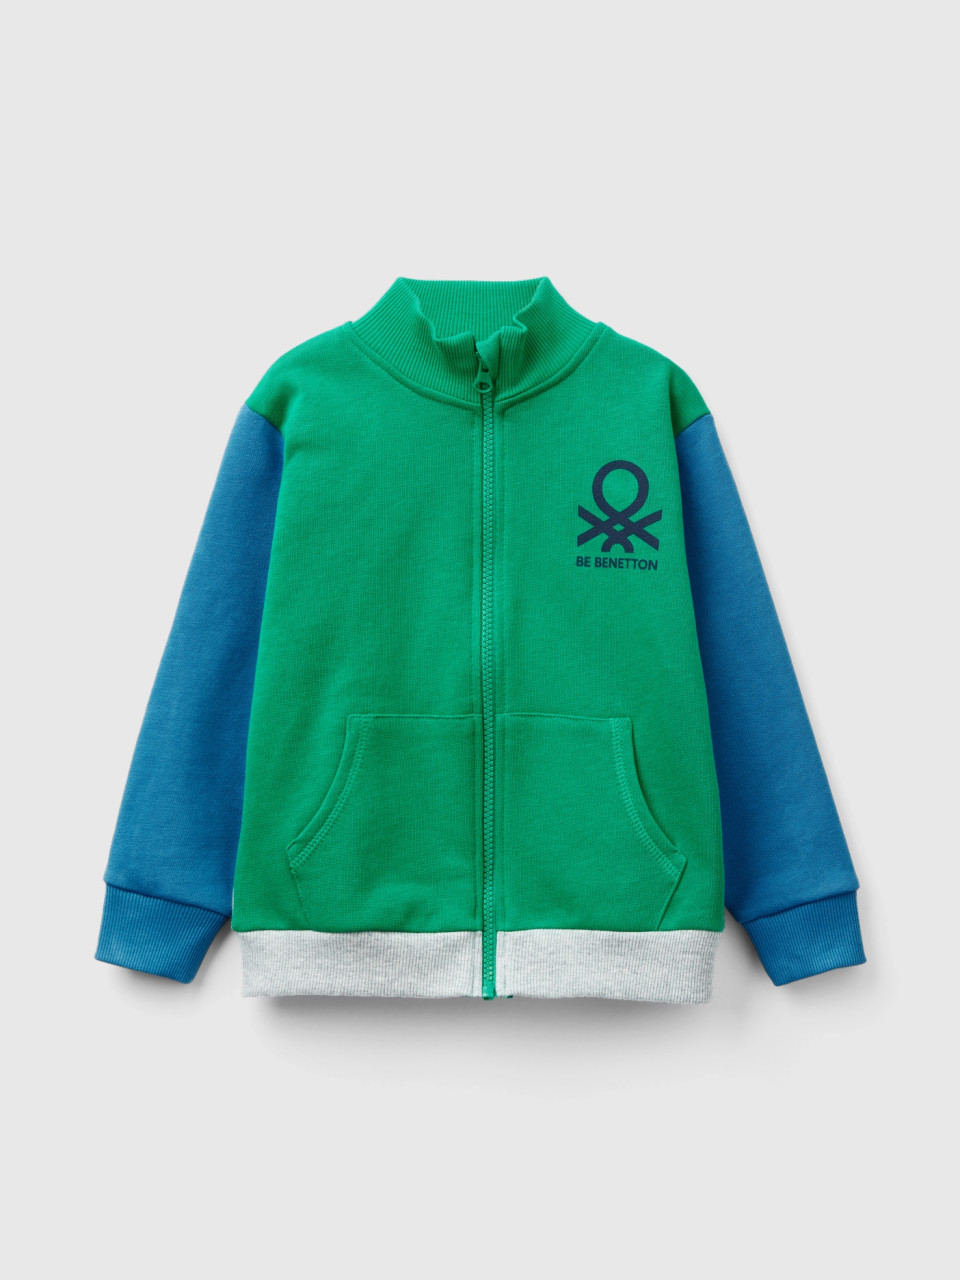 Benetton, Sweatshirt In Organic Cotton With Zip, Multi-color, Kids